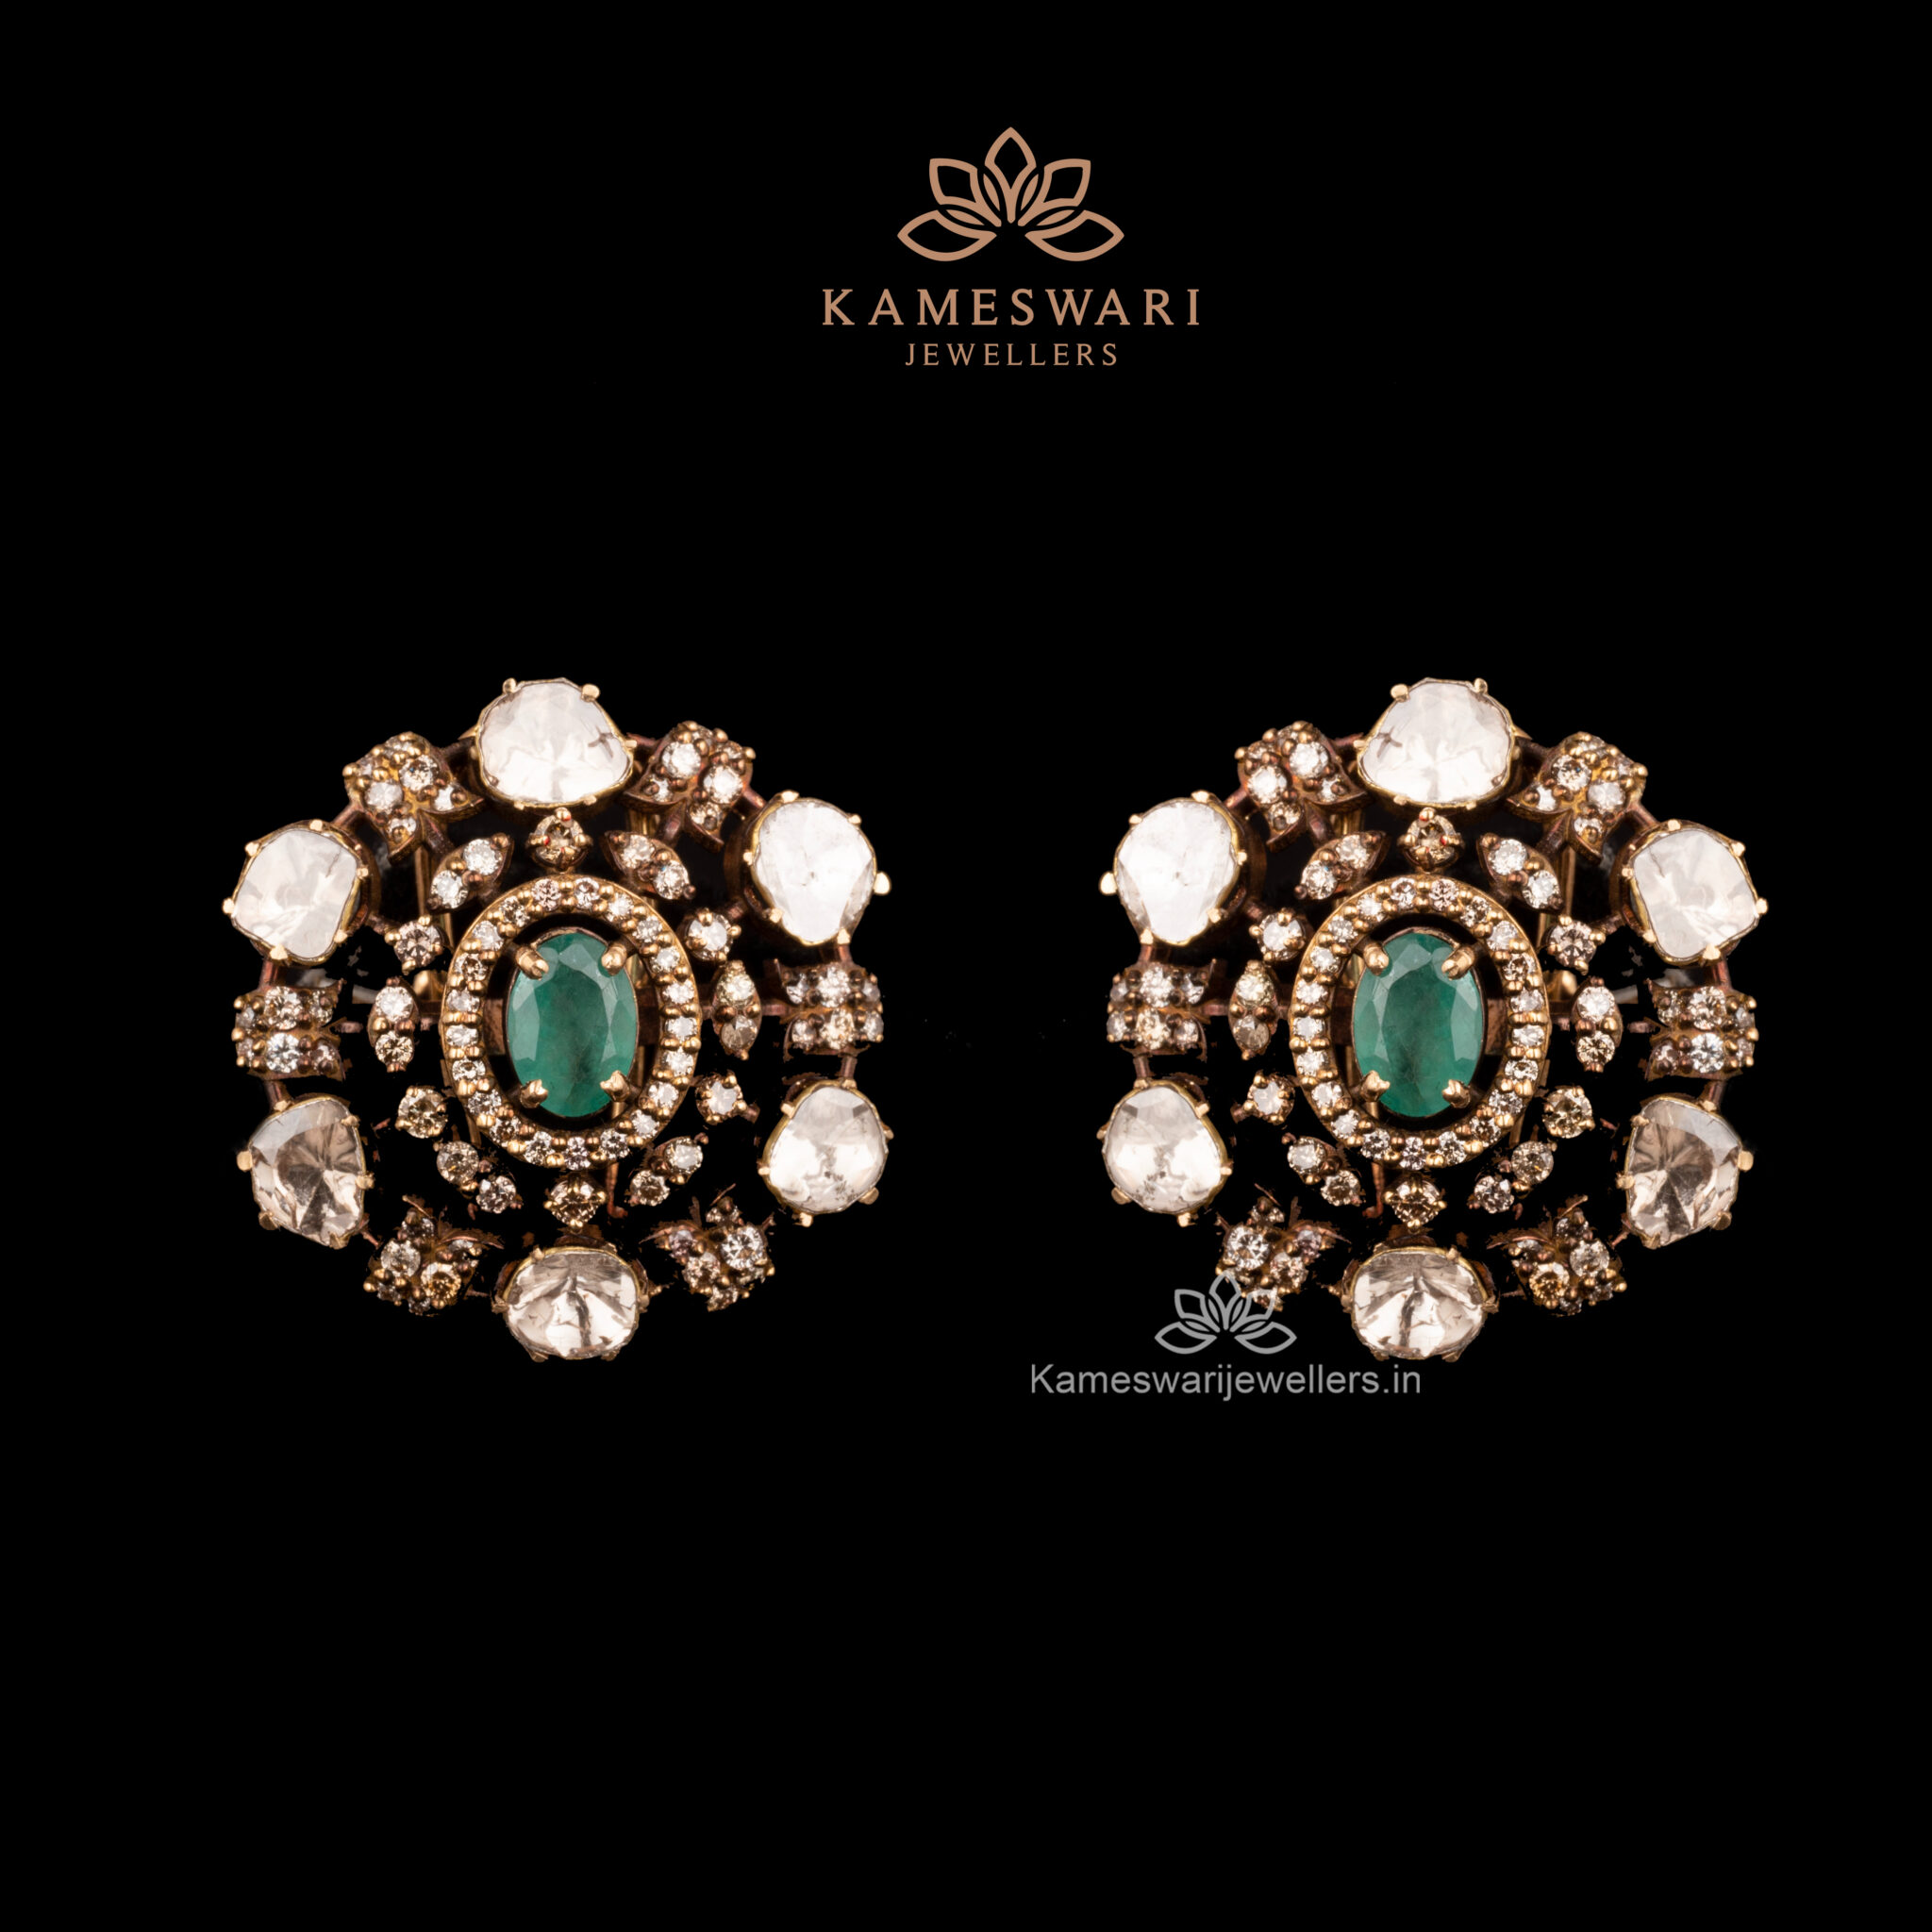 Polki jewellery is perennial and exuberant at Kameswari Jewellers